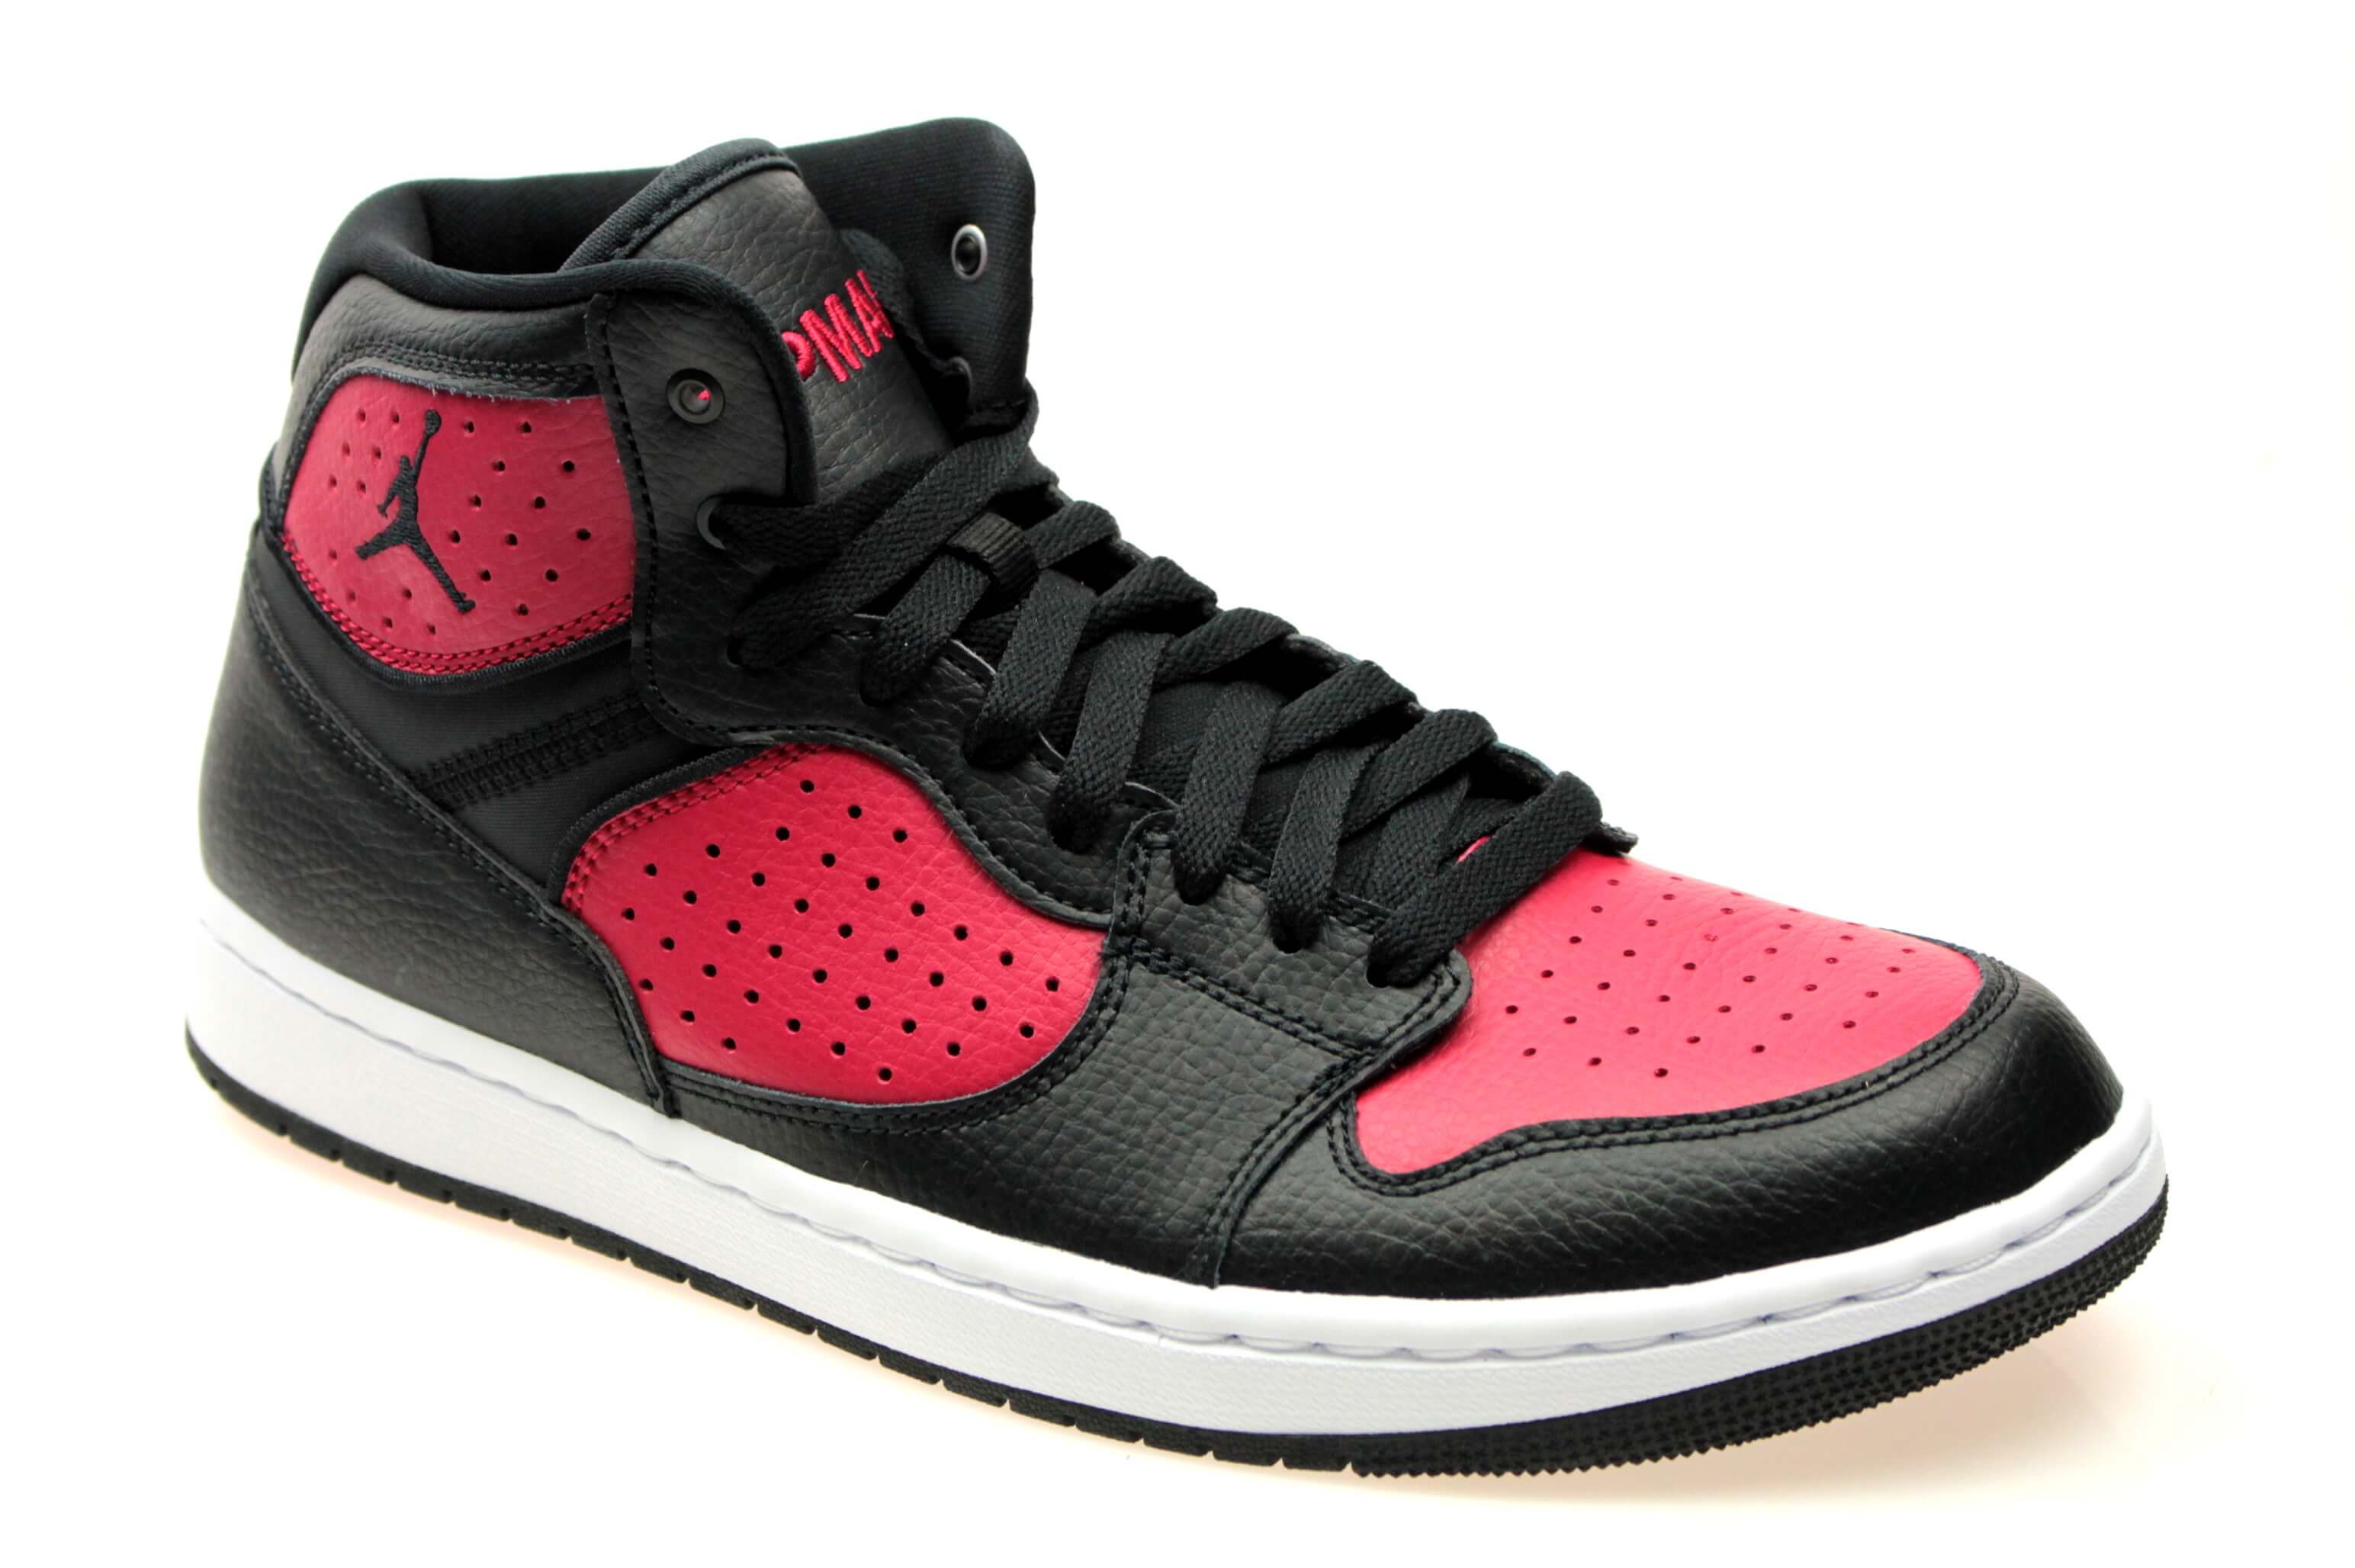 Obuwie Nike Jordan Access AR3762 006 Czerwone- obuwietop.pl